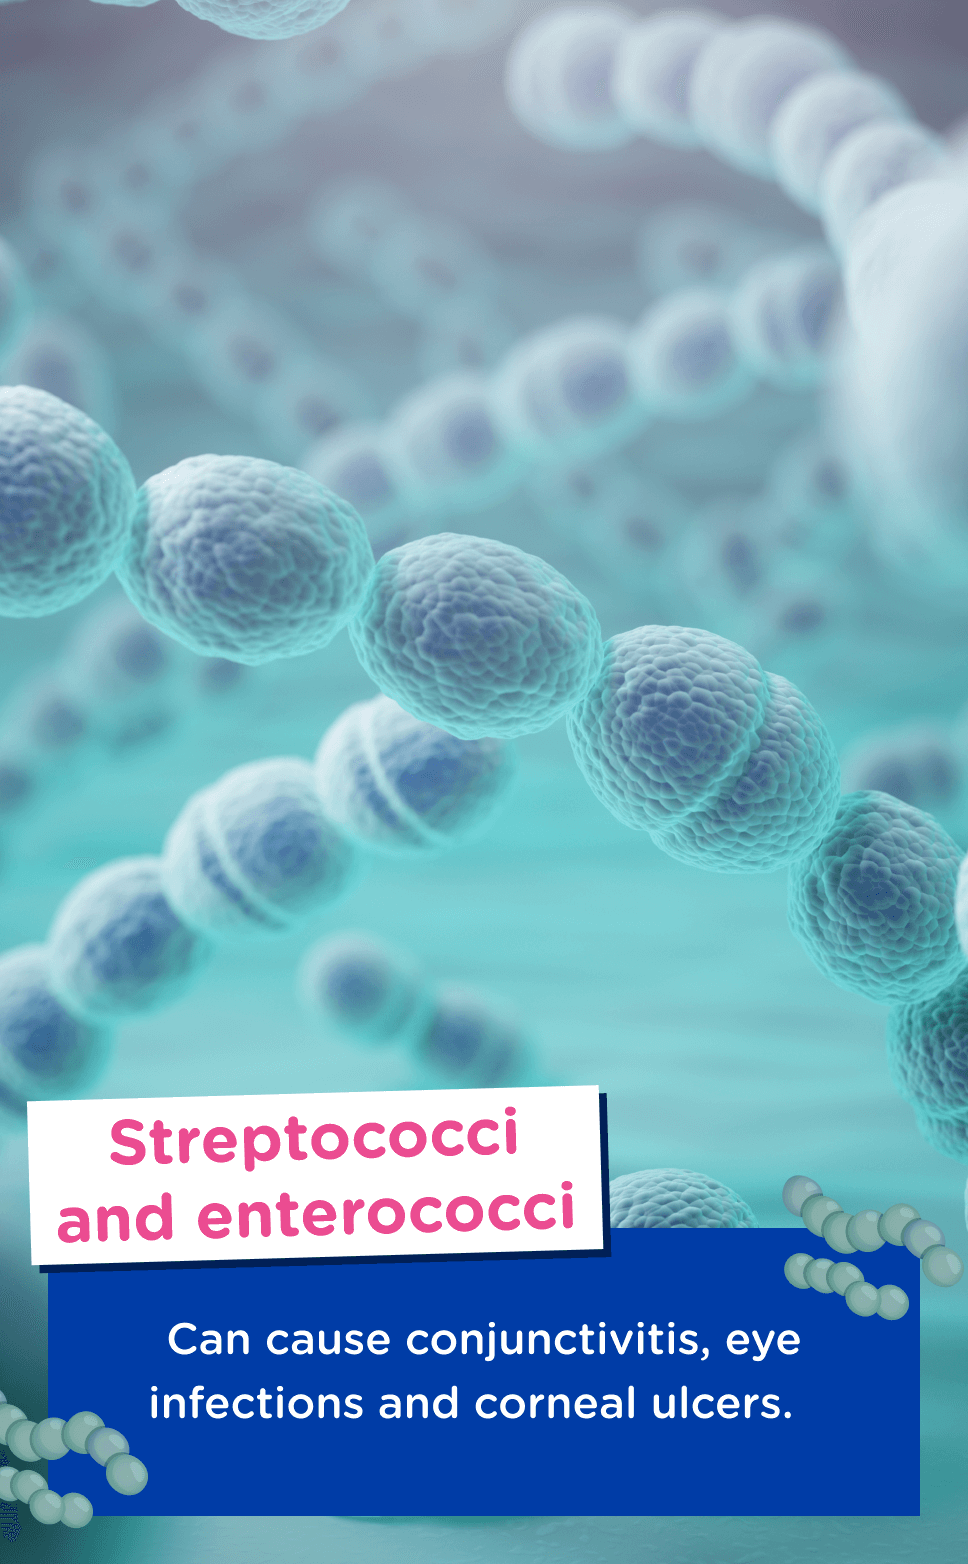 Image of streptococci and enterococci